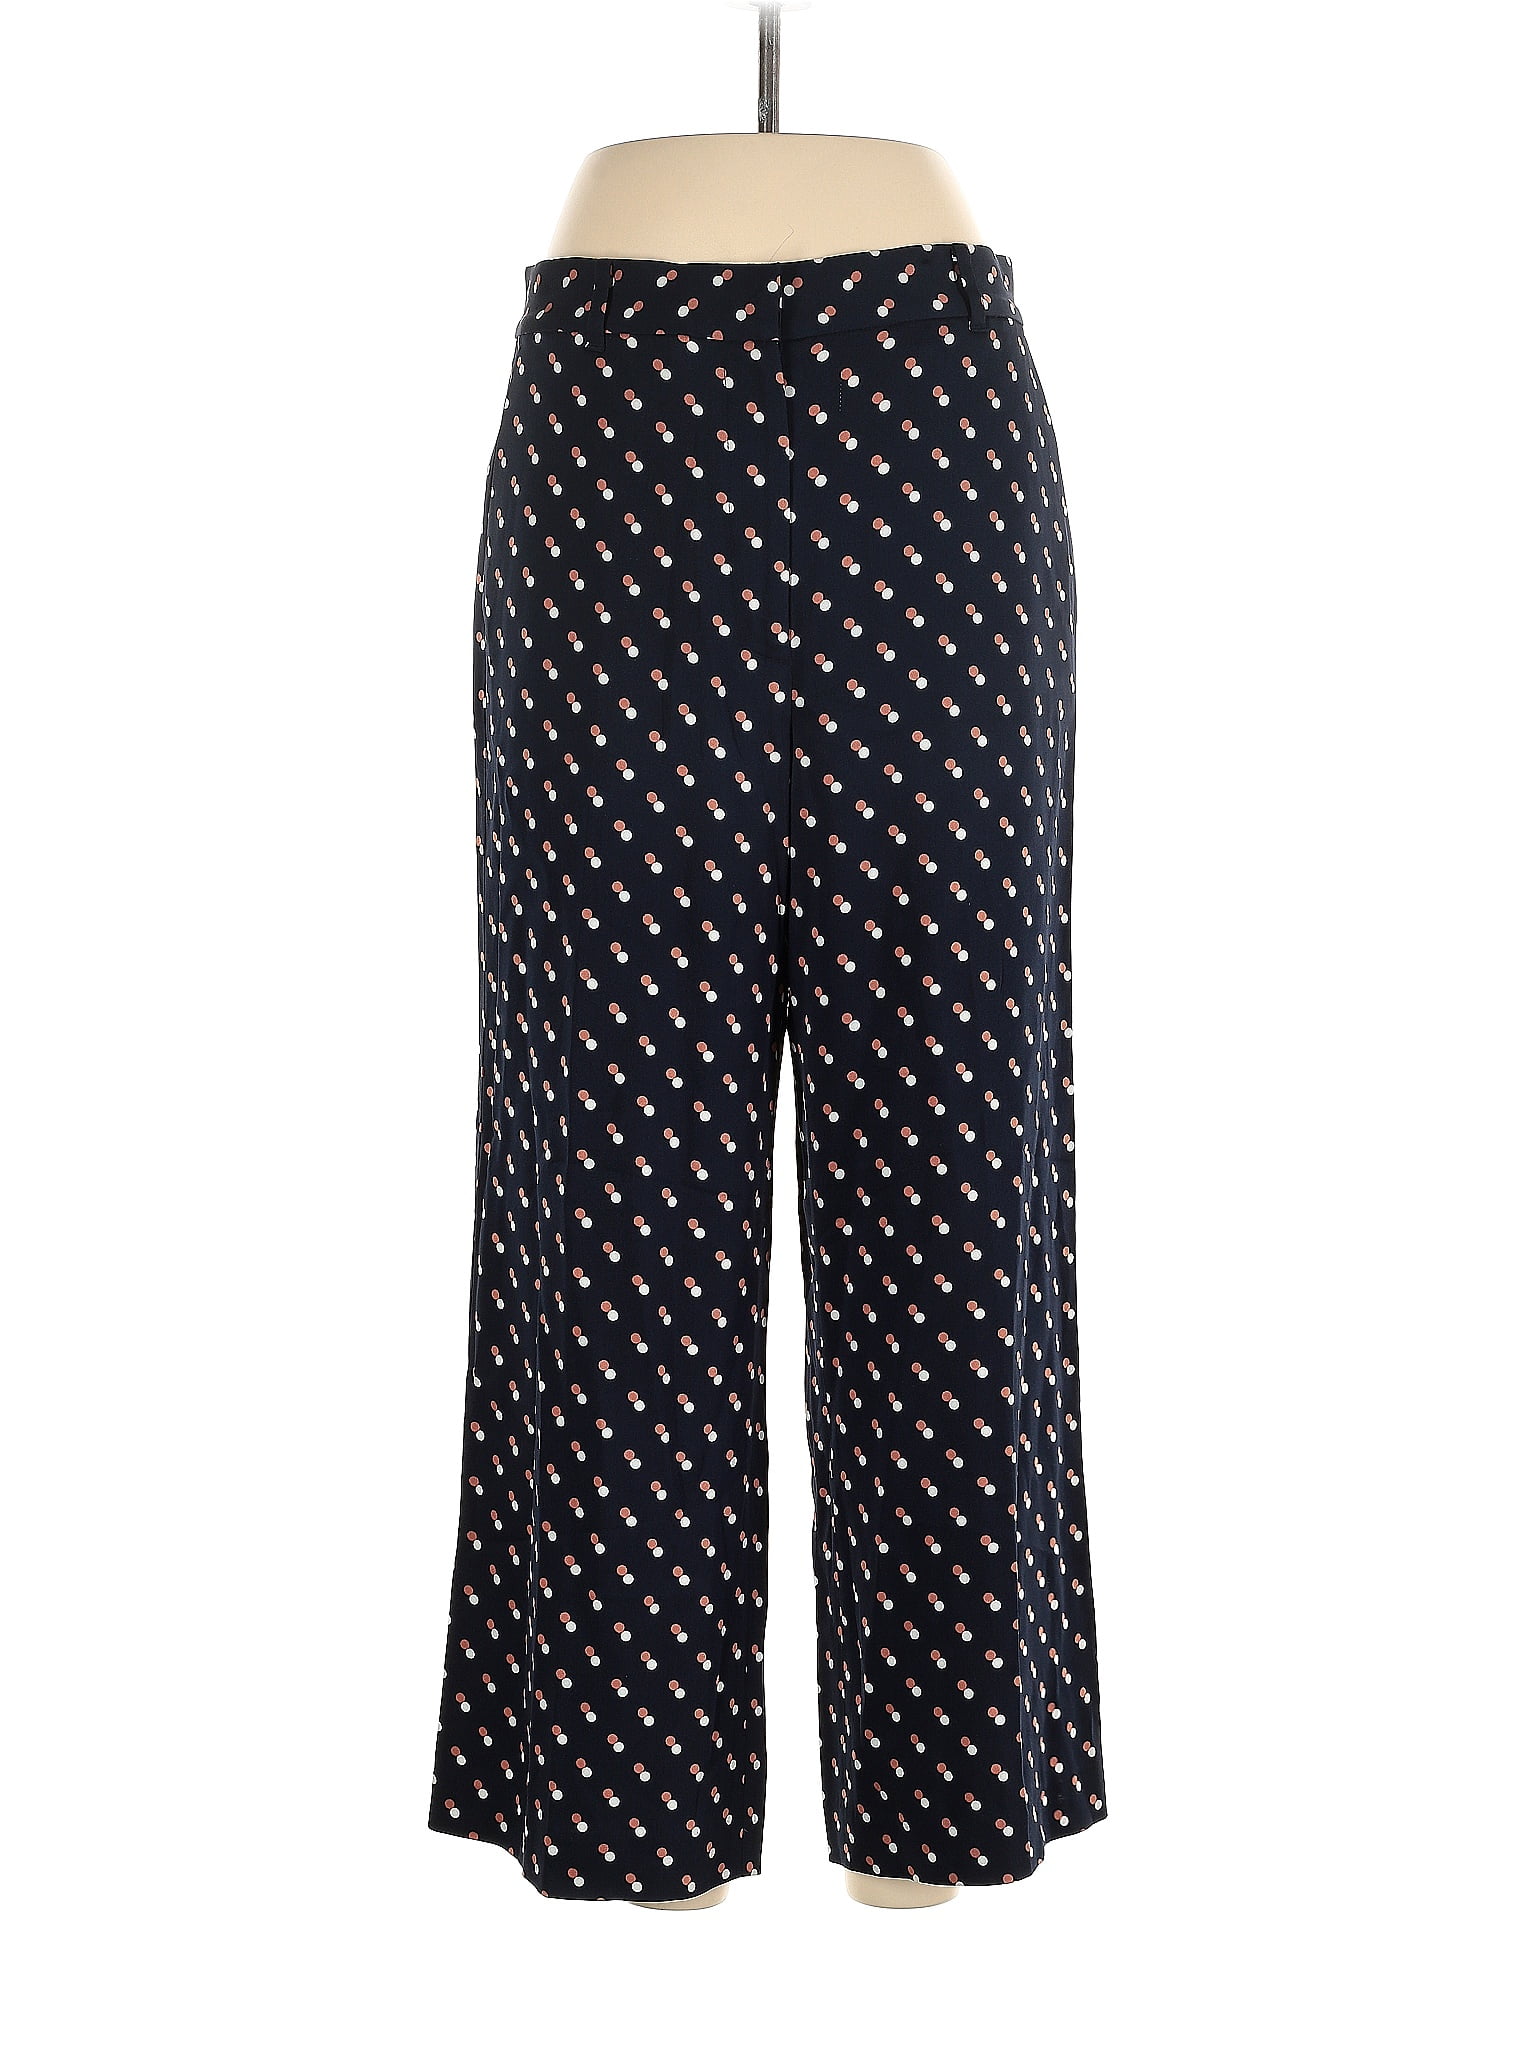 Ann Taylor Black Blue Casual Pants Size 8 - 75% off | ThredUp